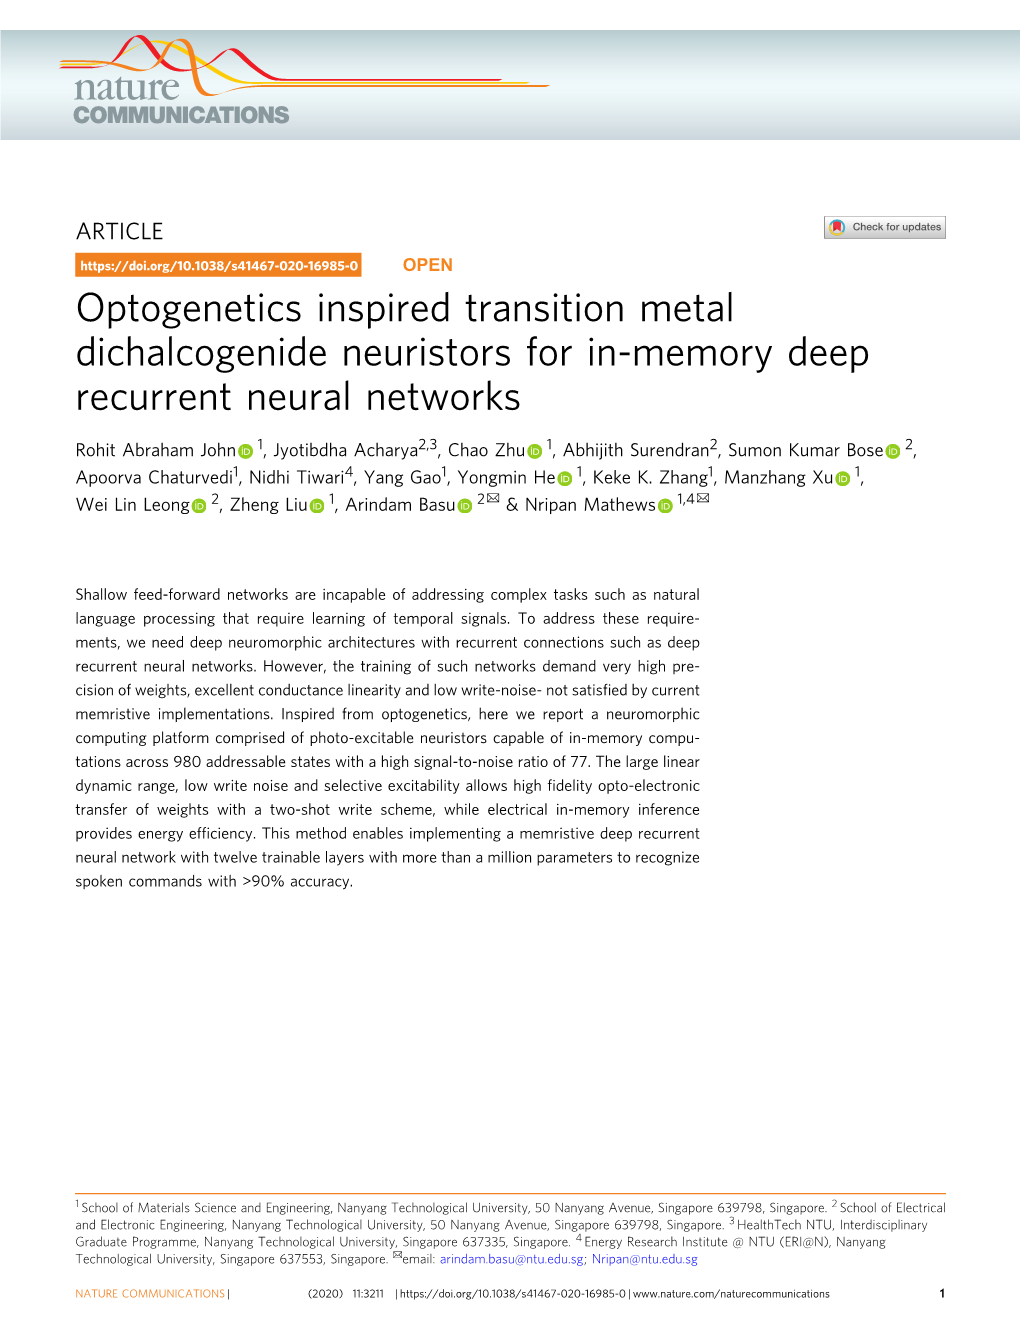 Optogenetics Inspired Transition Metal Dichalcogenide Neuristors for In-Memory Deep Recurrent Neural Networks